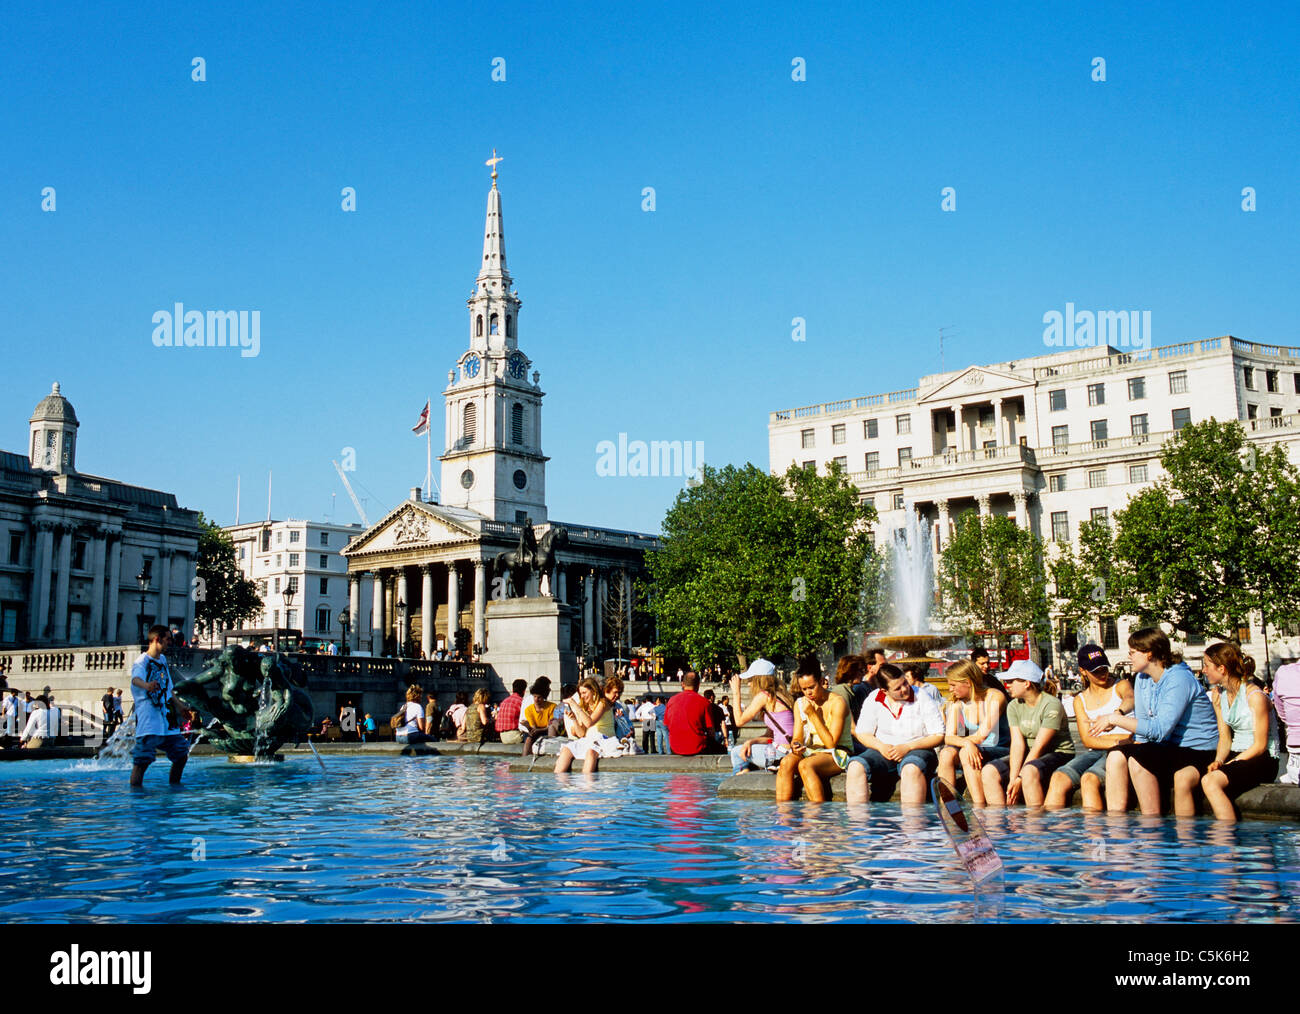 People In The Fountain Trafalgar Square London Uk Stock Photo